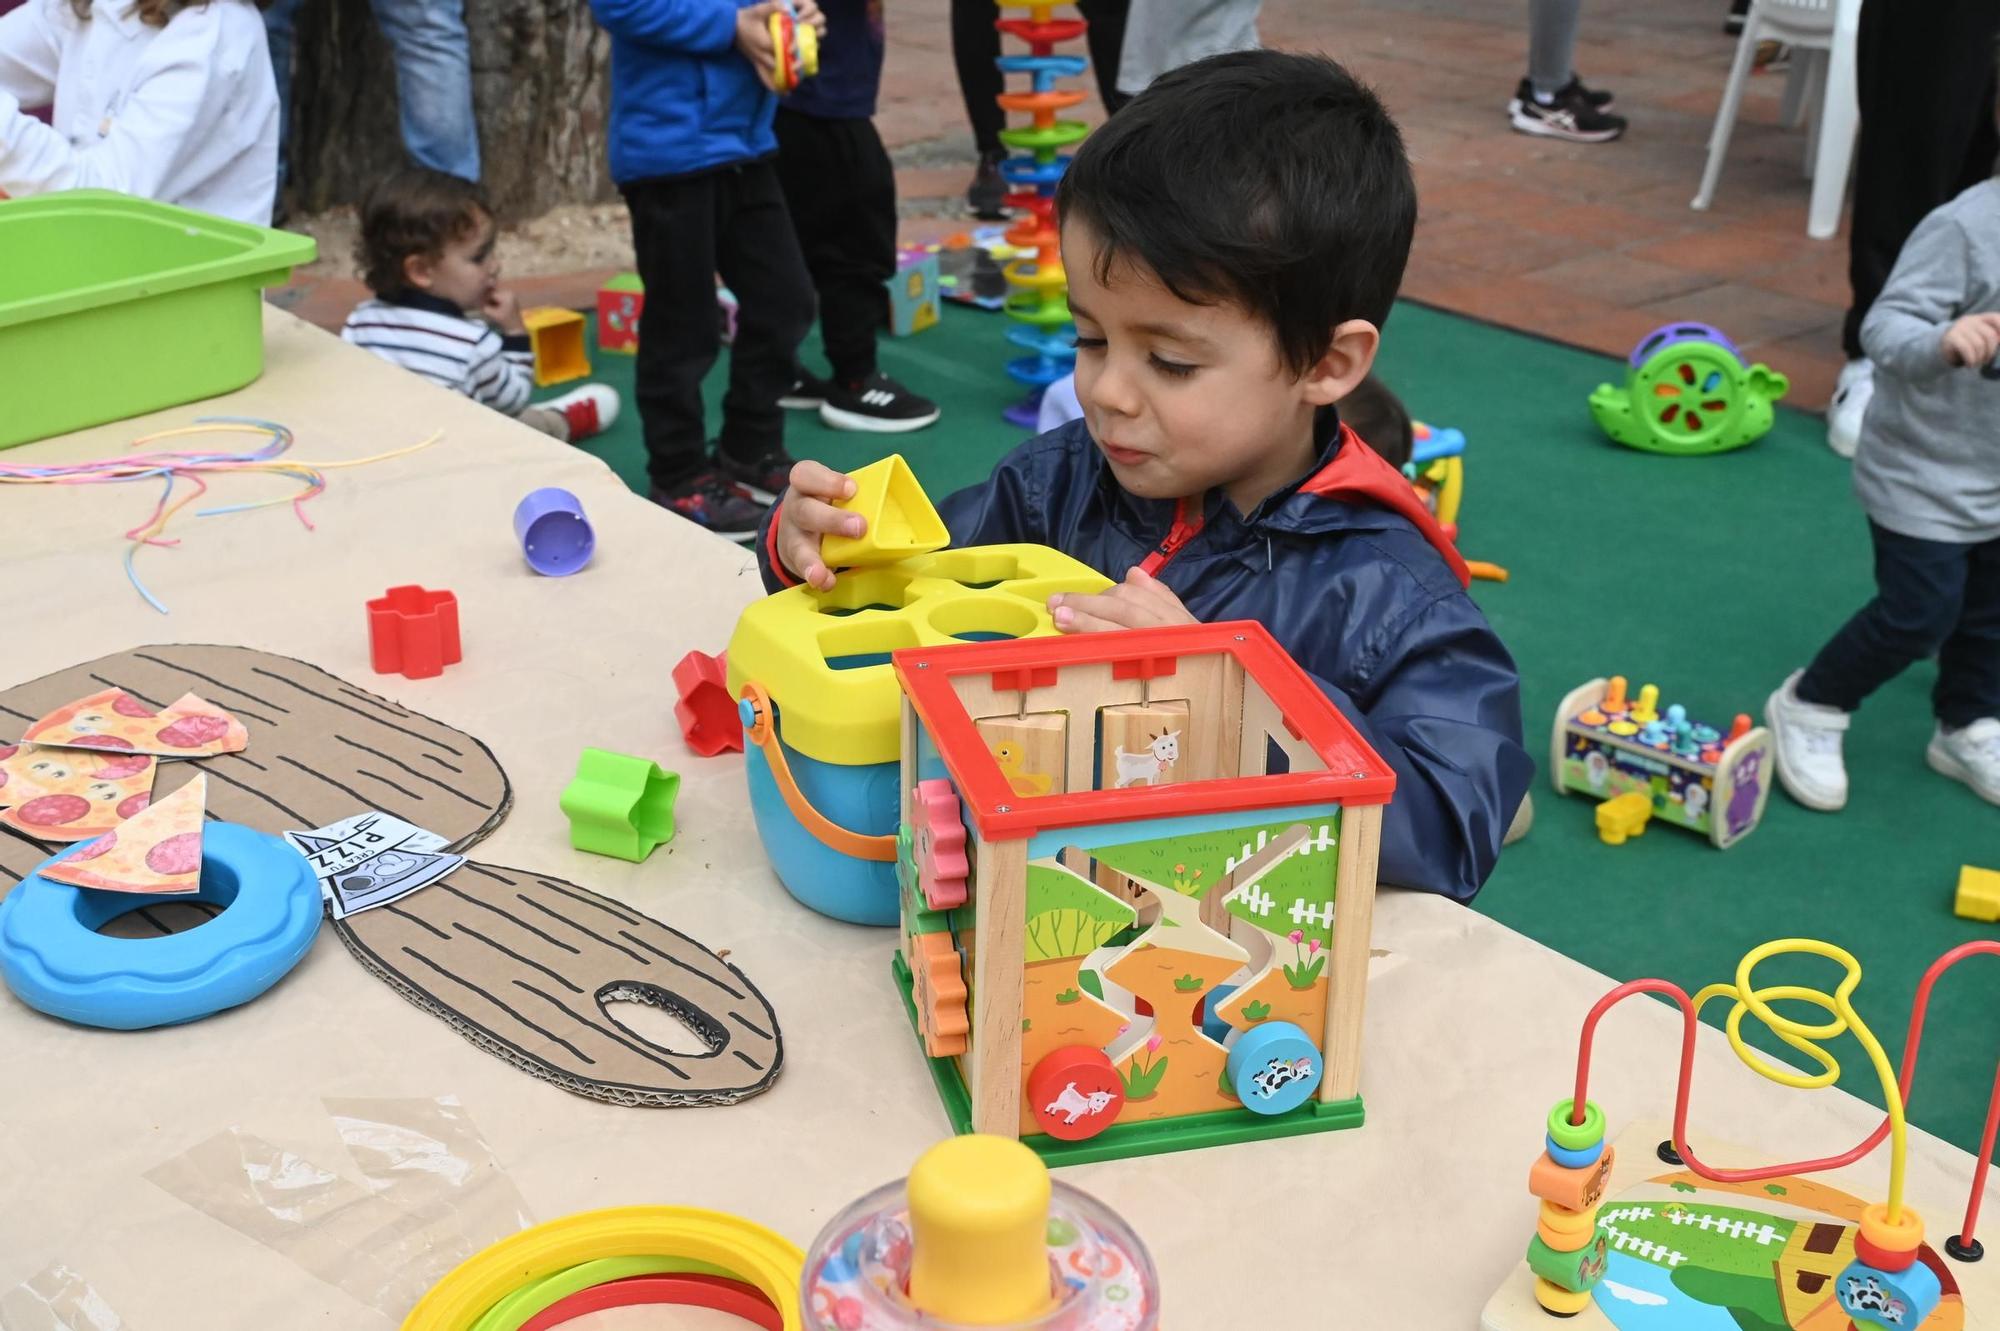 Fotos de la Festa de la Diversitat para visibilizar el autismo en Vila-real